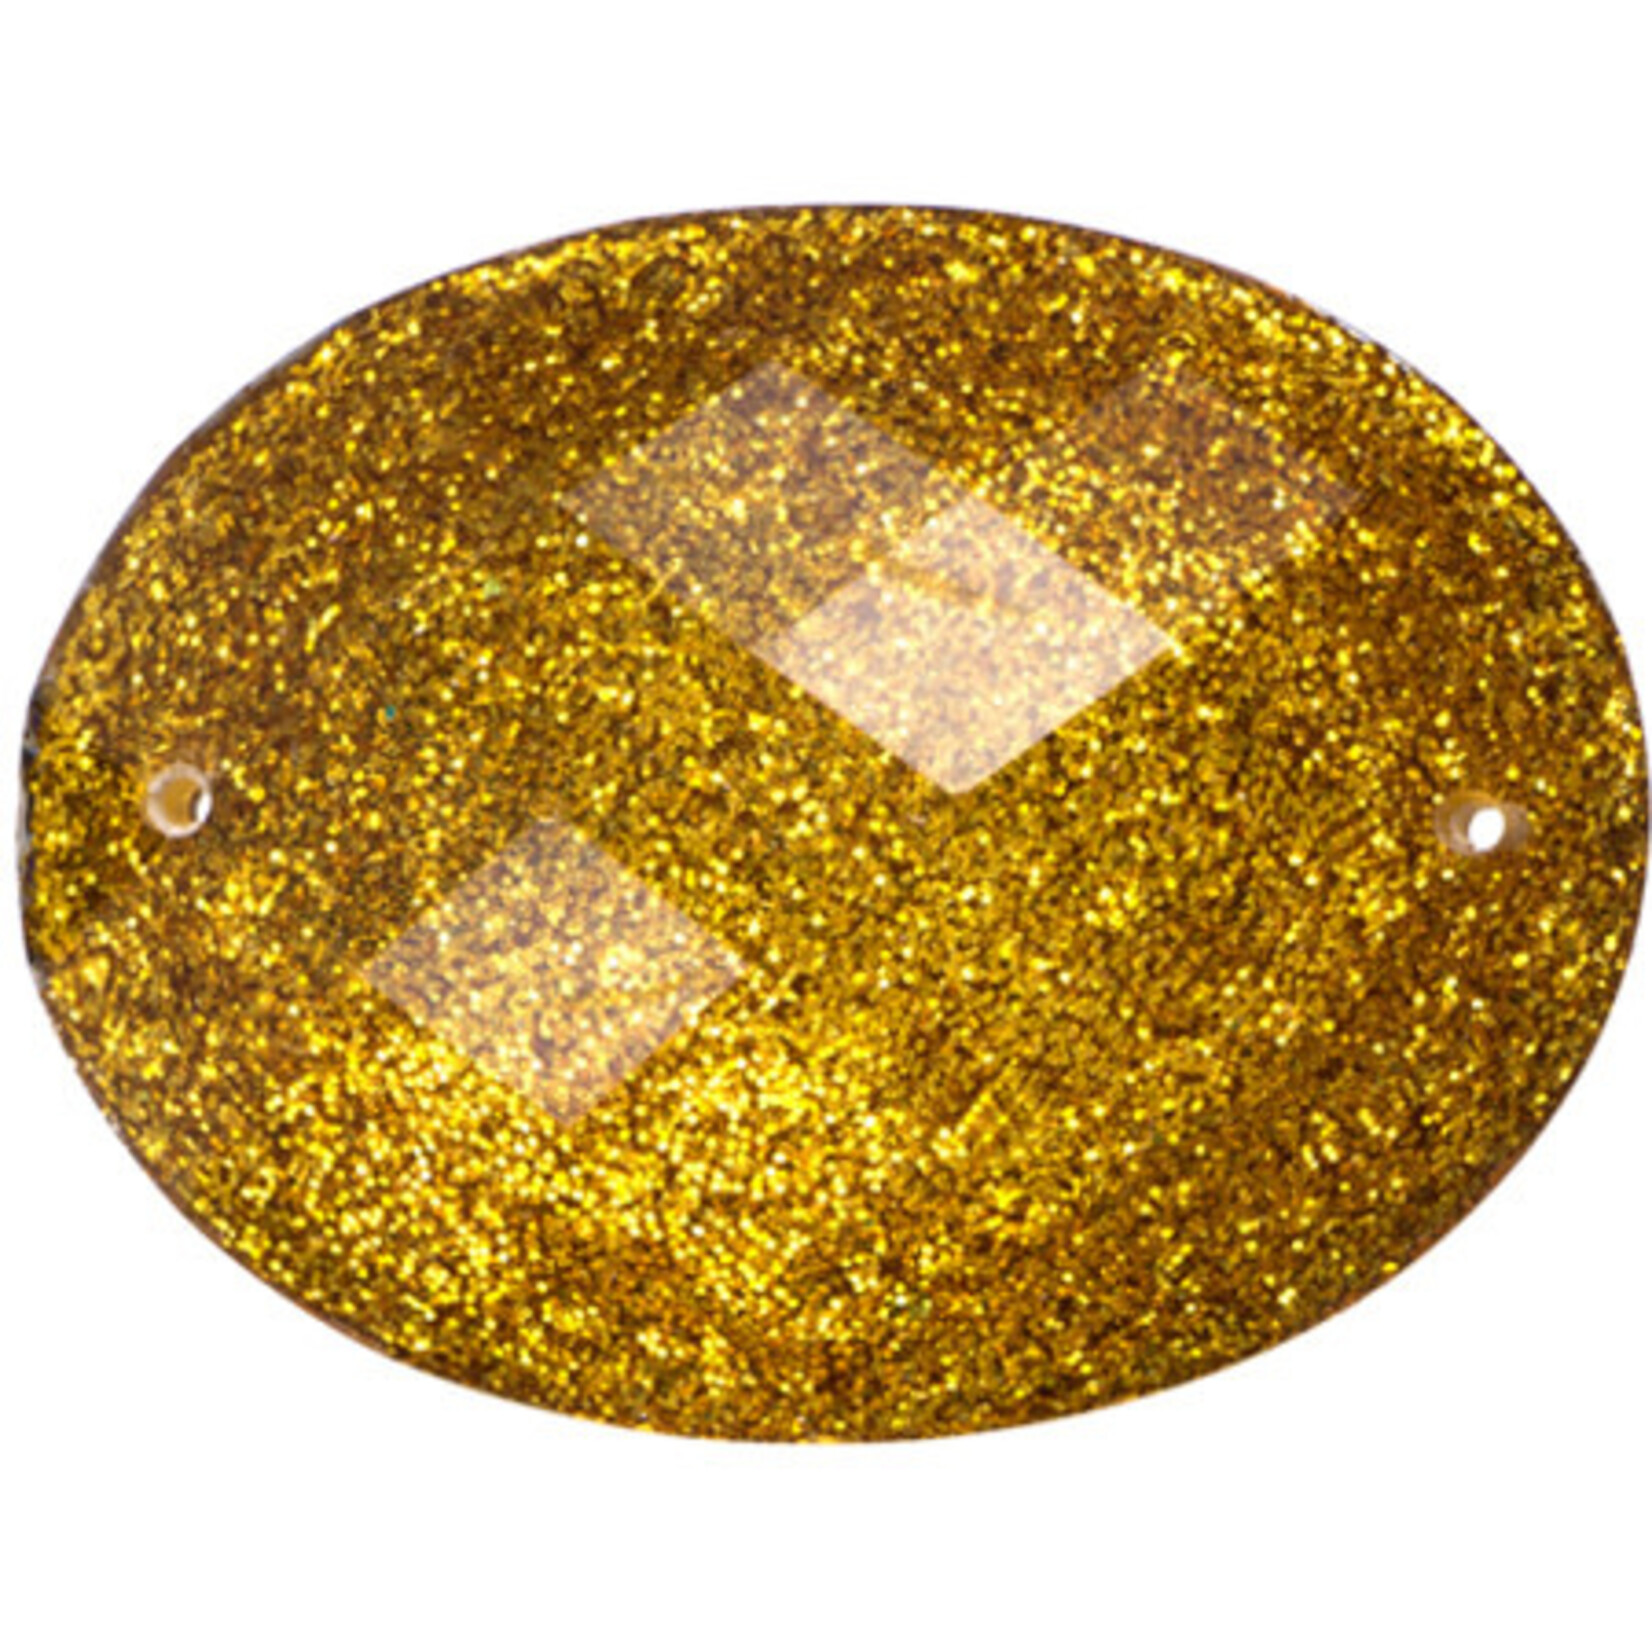 Resin Sew-on Glitter Stone 30x40mm Oval